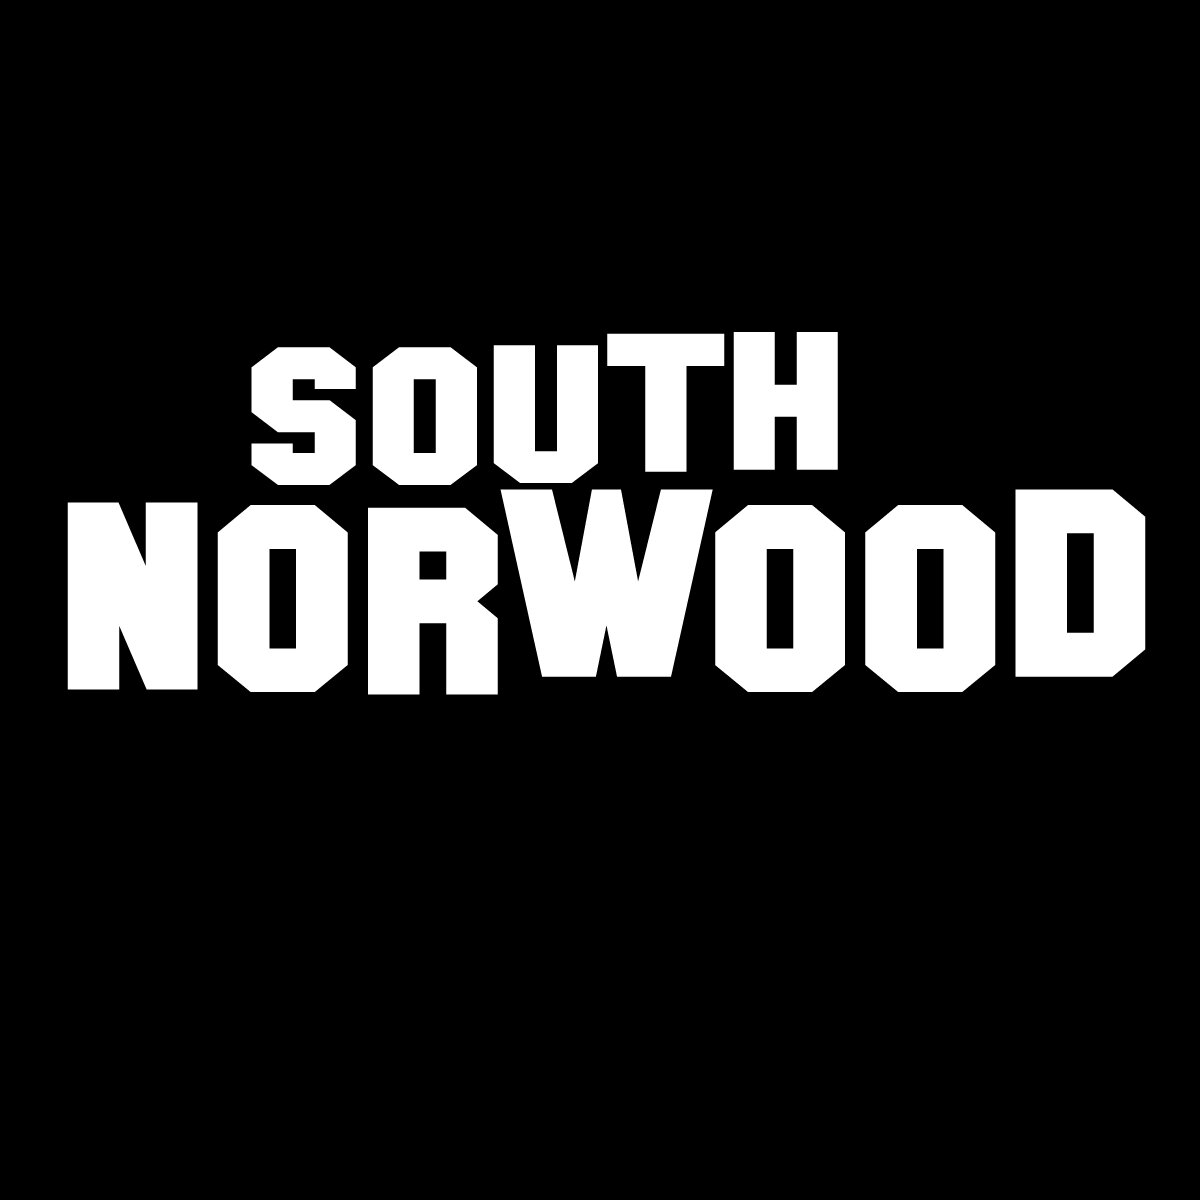 south norwood logo_final.jpg